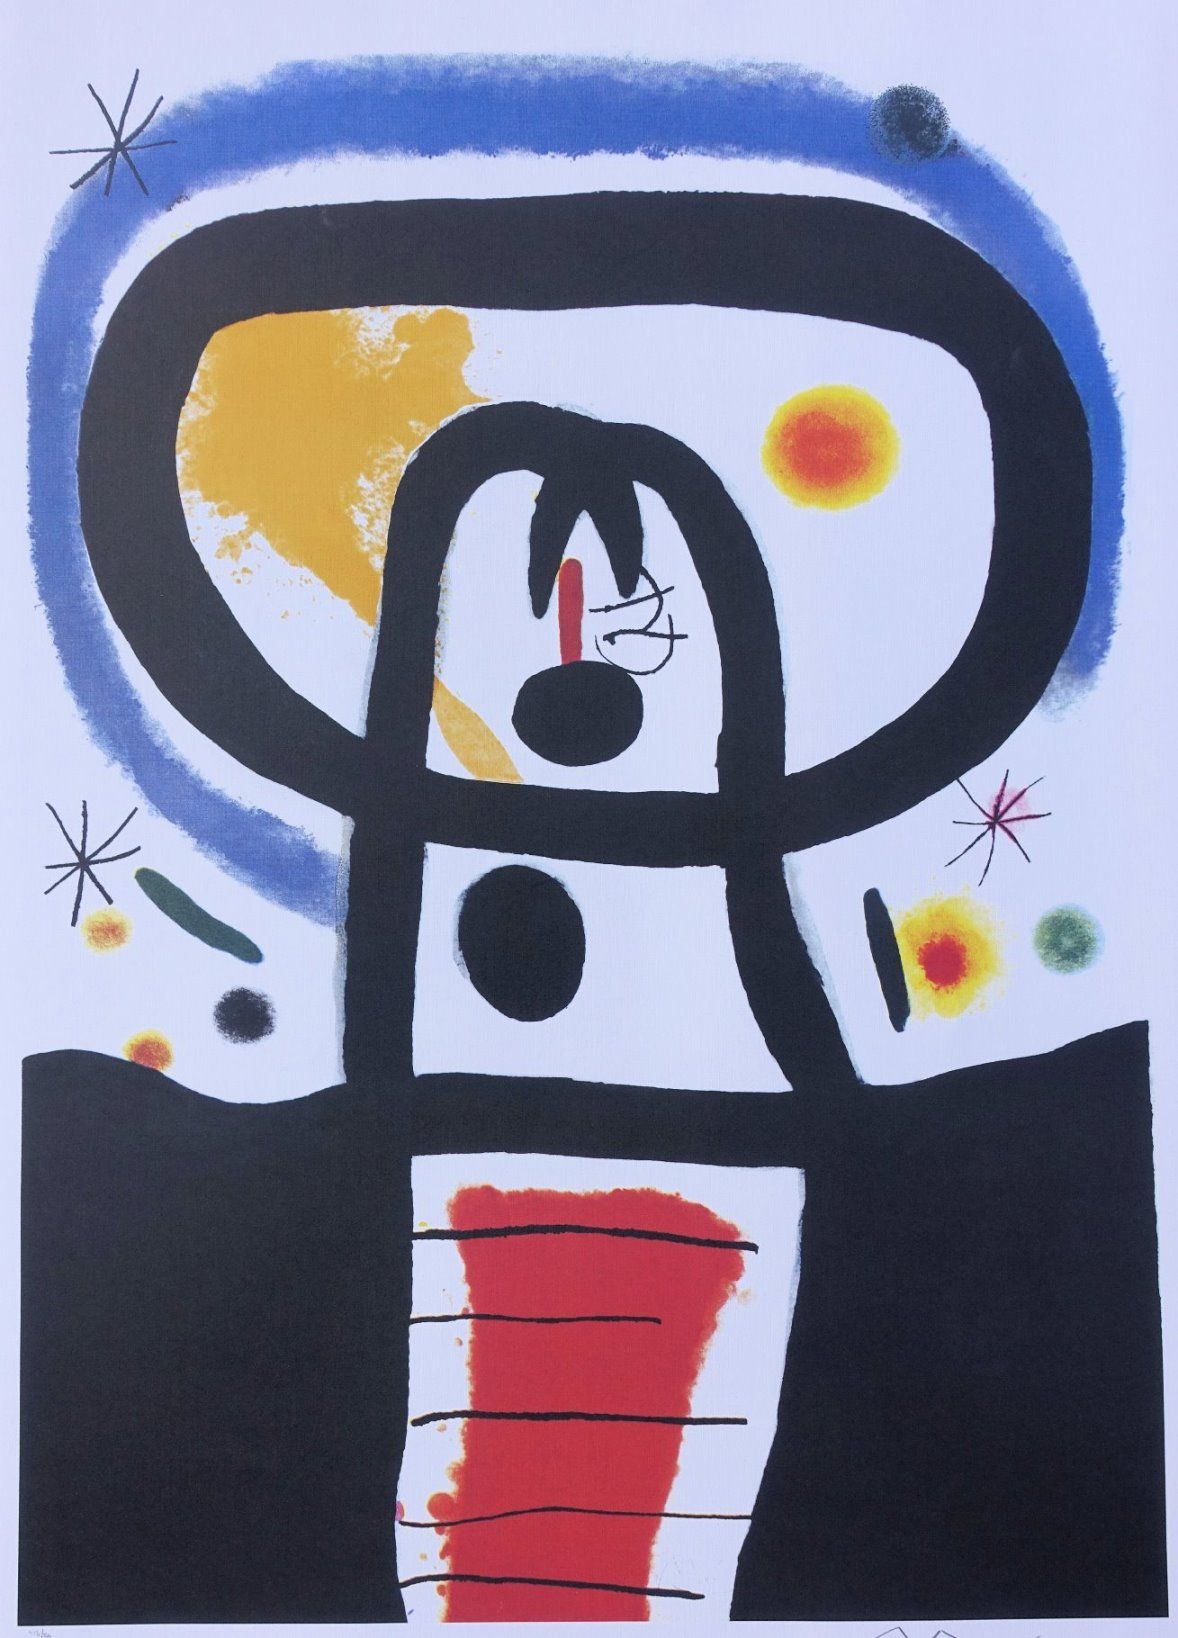 Joan Miro JOAN MIRO (1893-1983) (nach)

Tagundnachtgleiche

Lithographiedruck na&hellip;